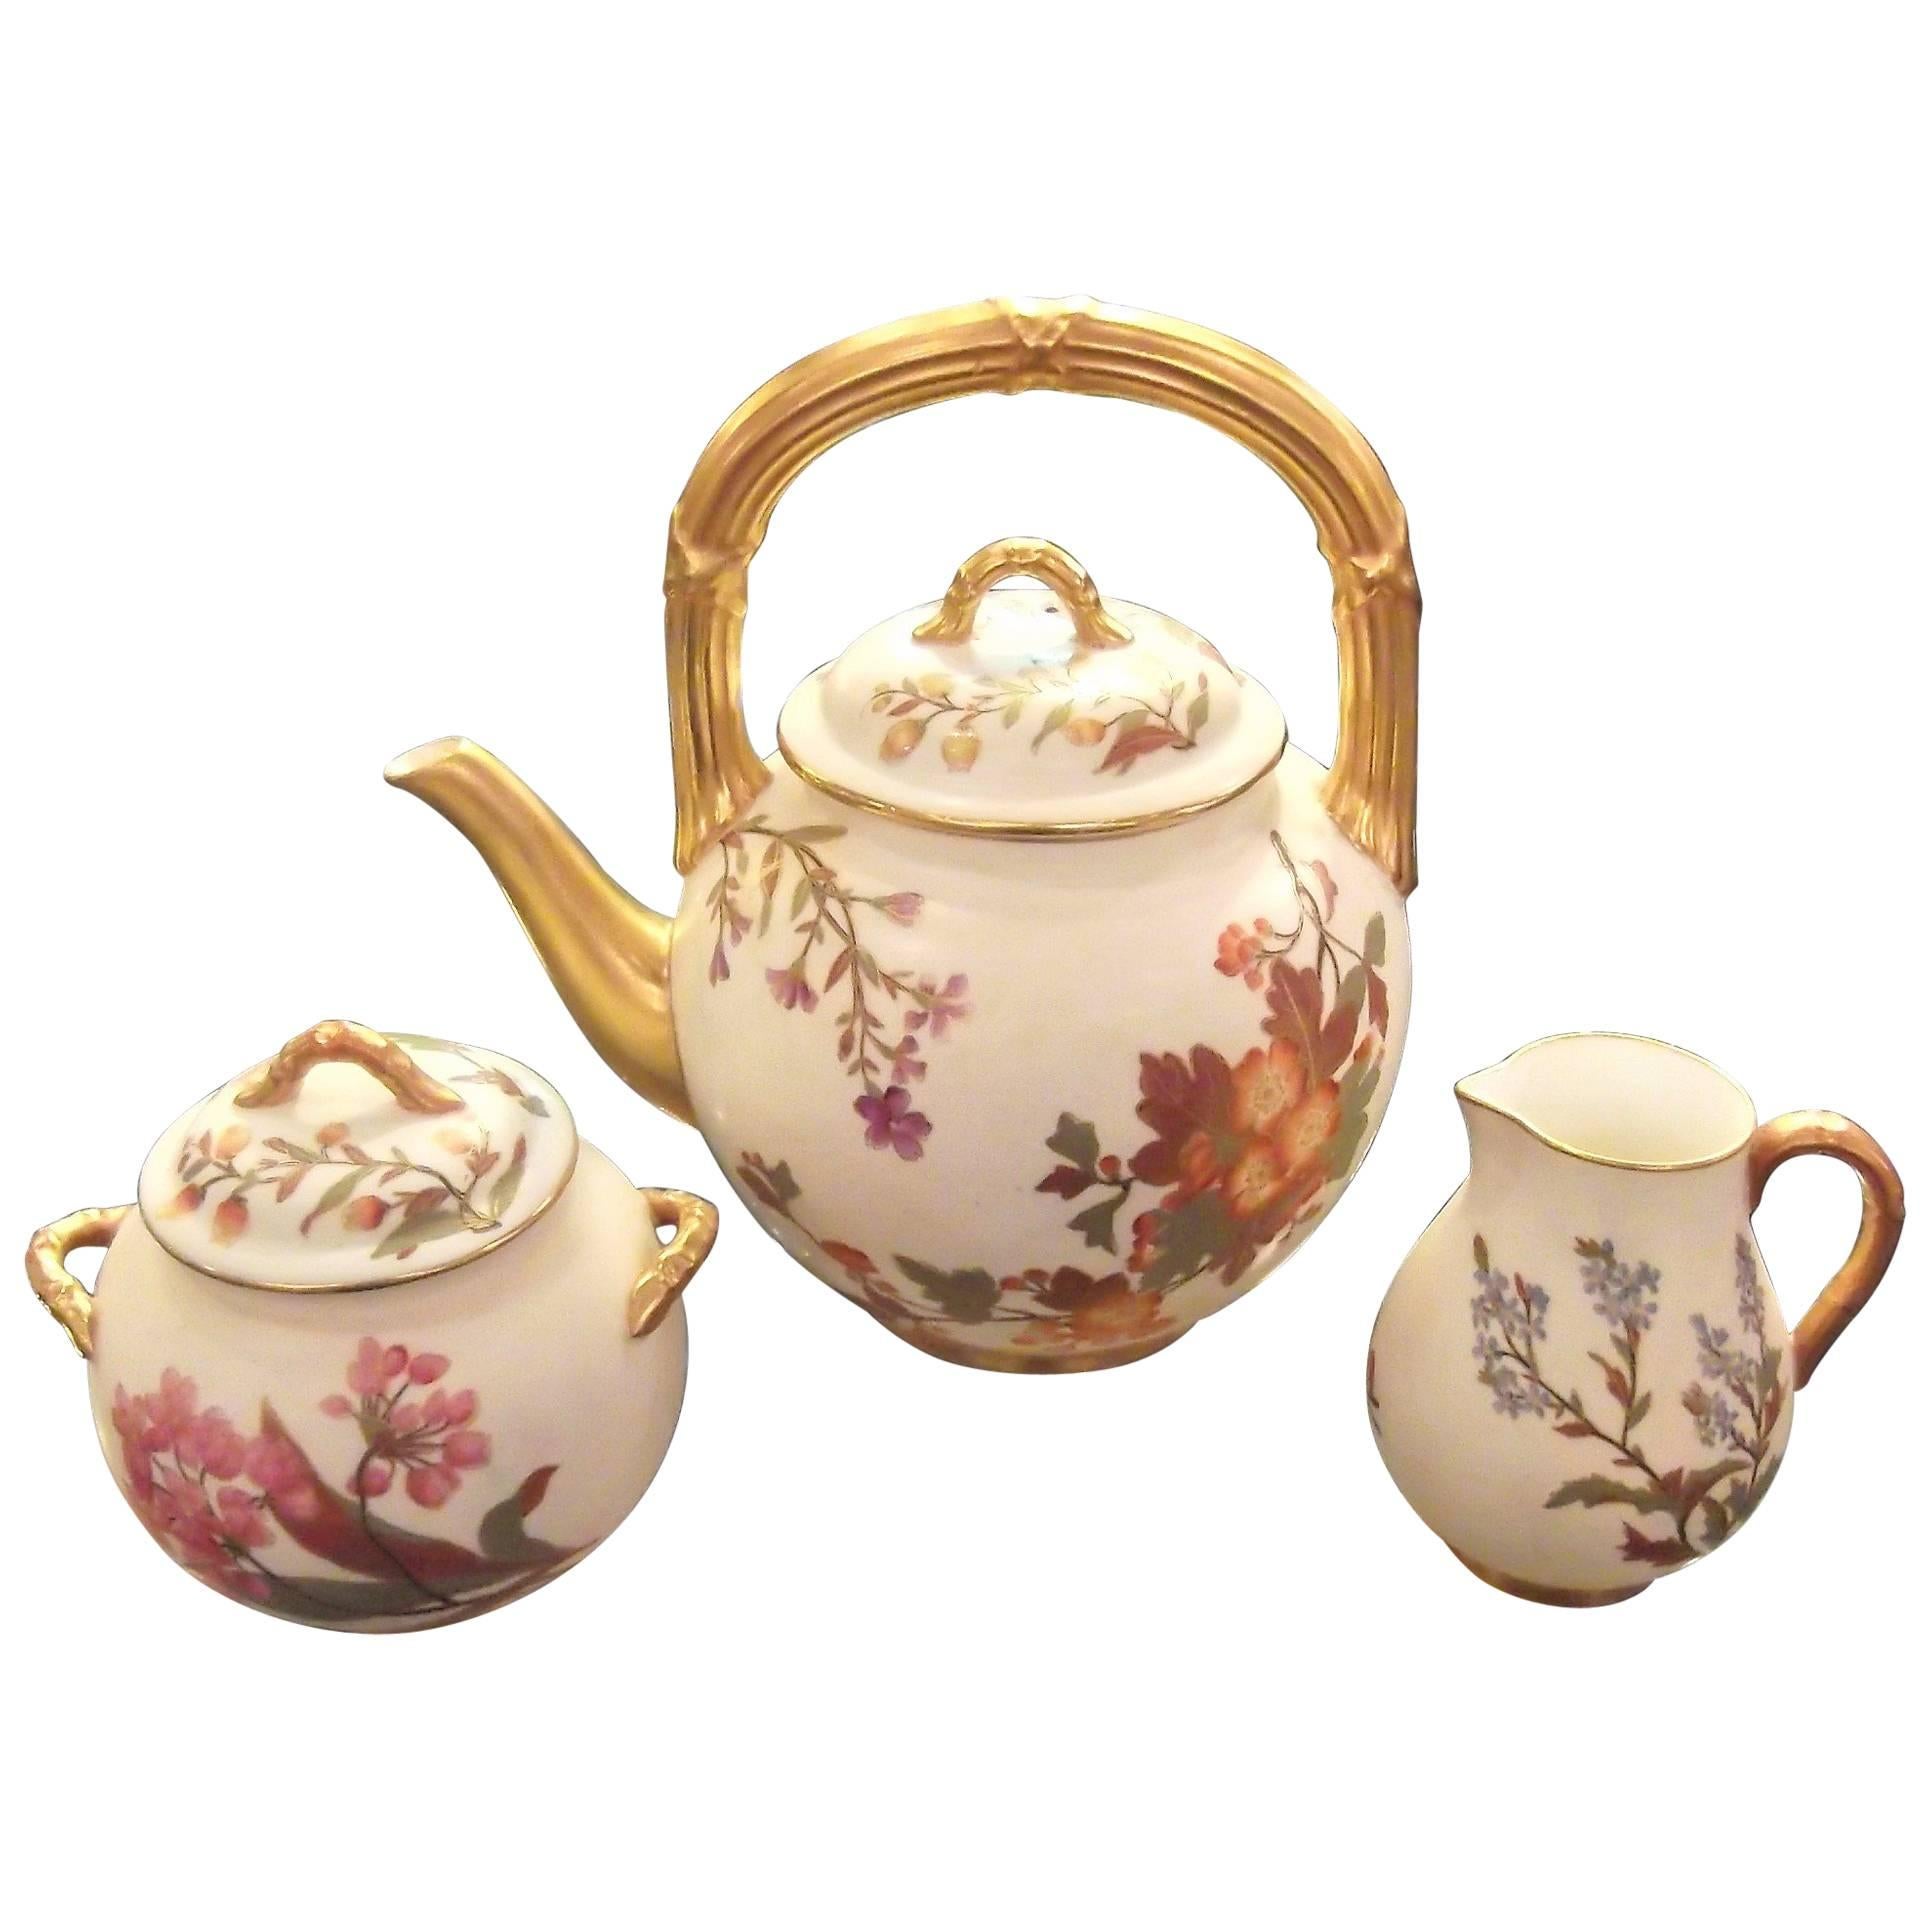 Antique English Hand-Painted Tea Set